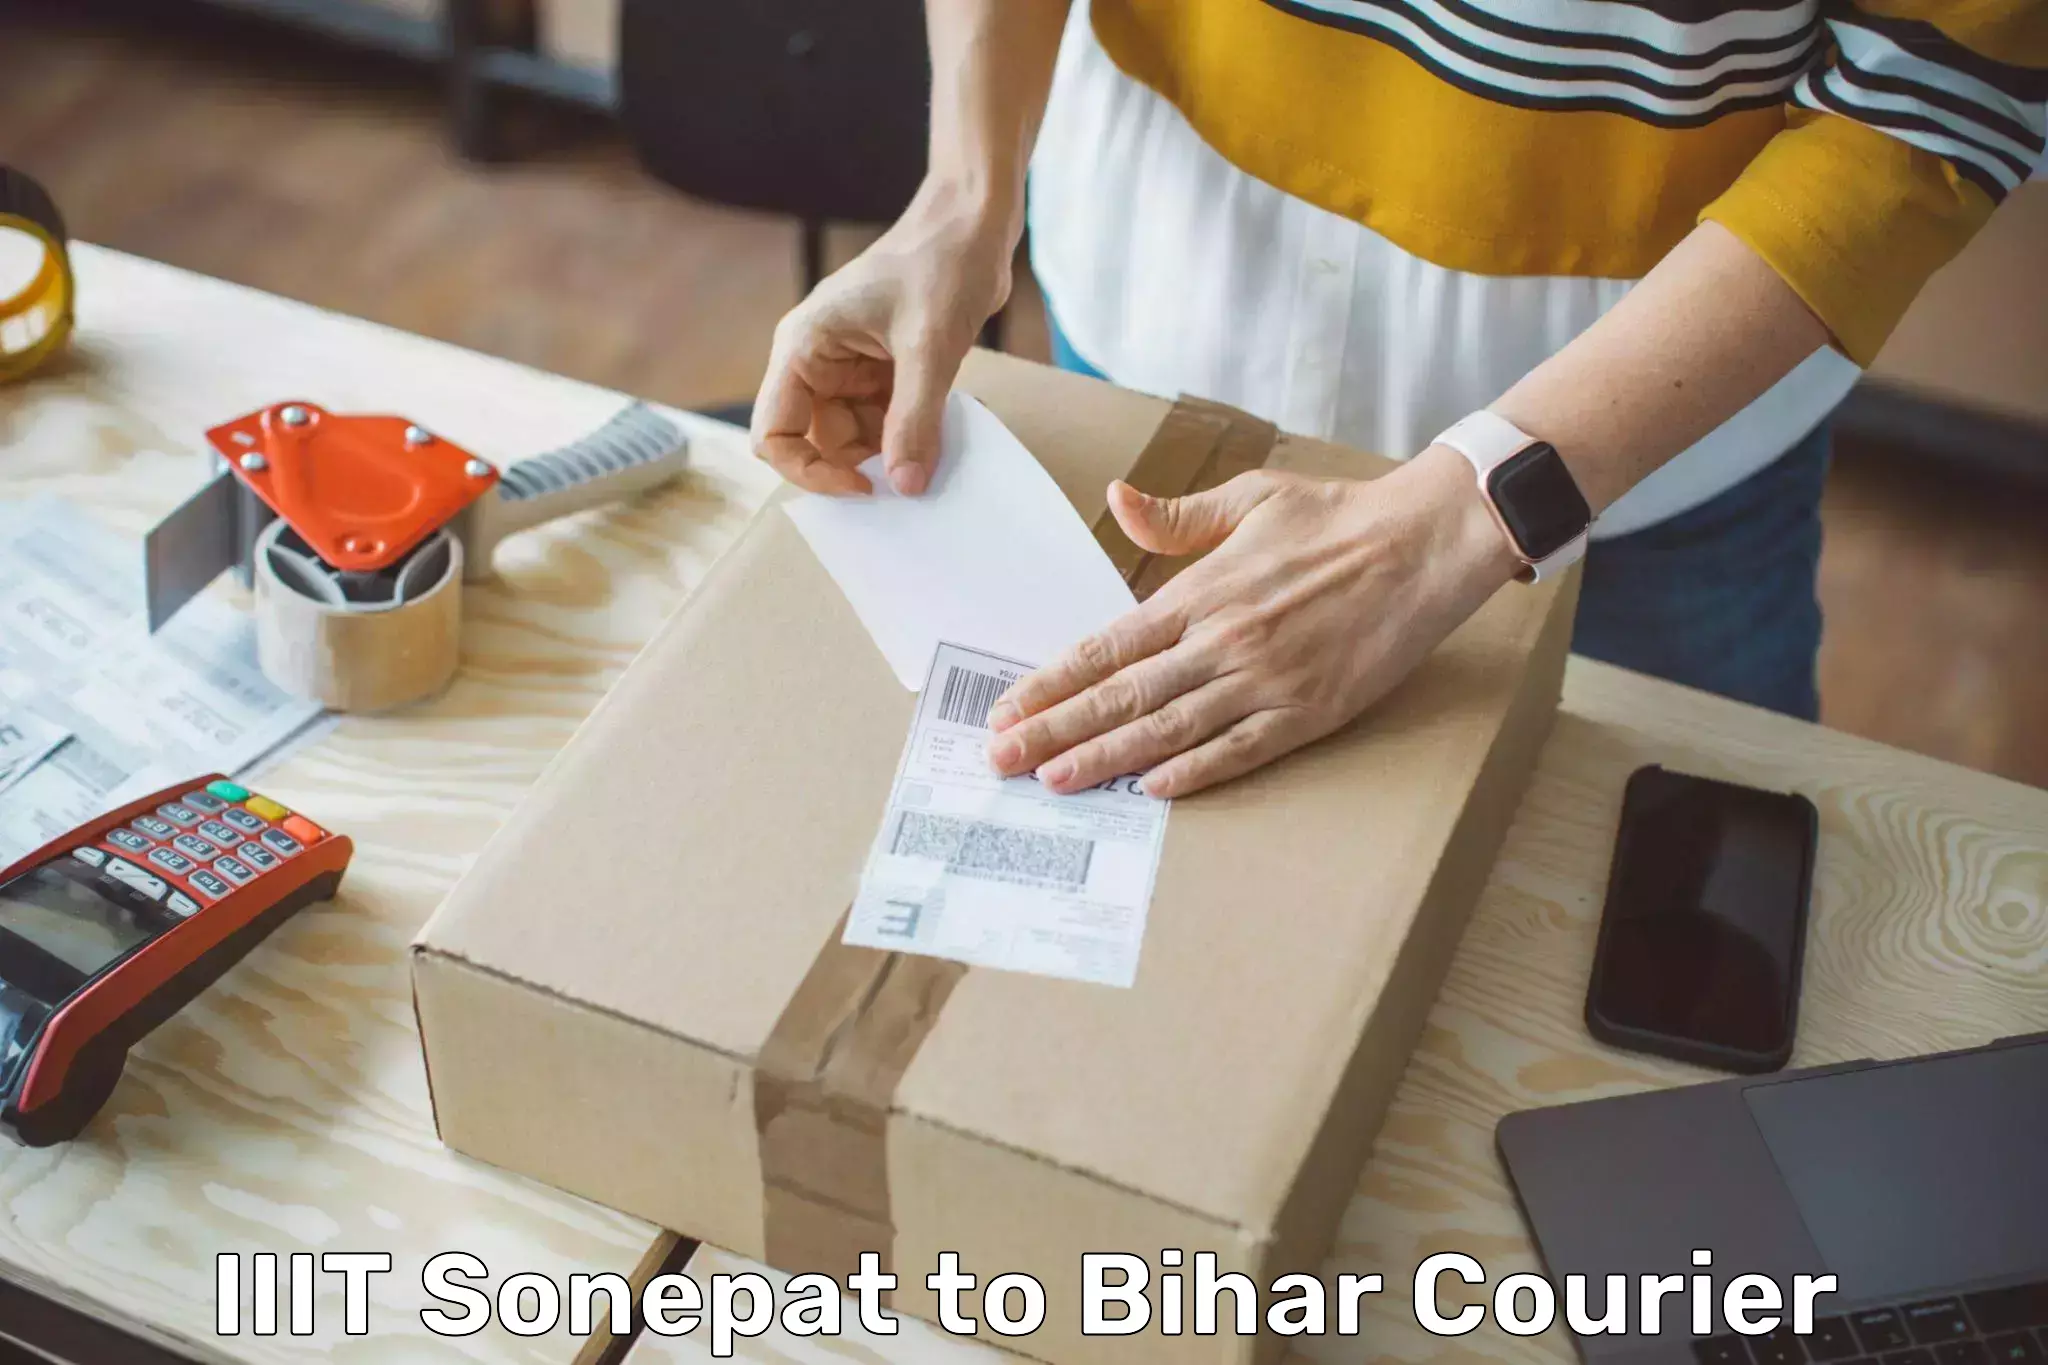 Reliable courier service IIIT Sonepat to Bhorey